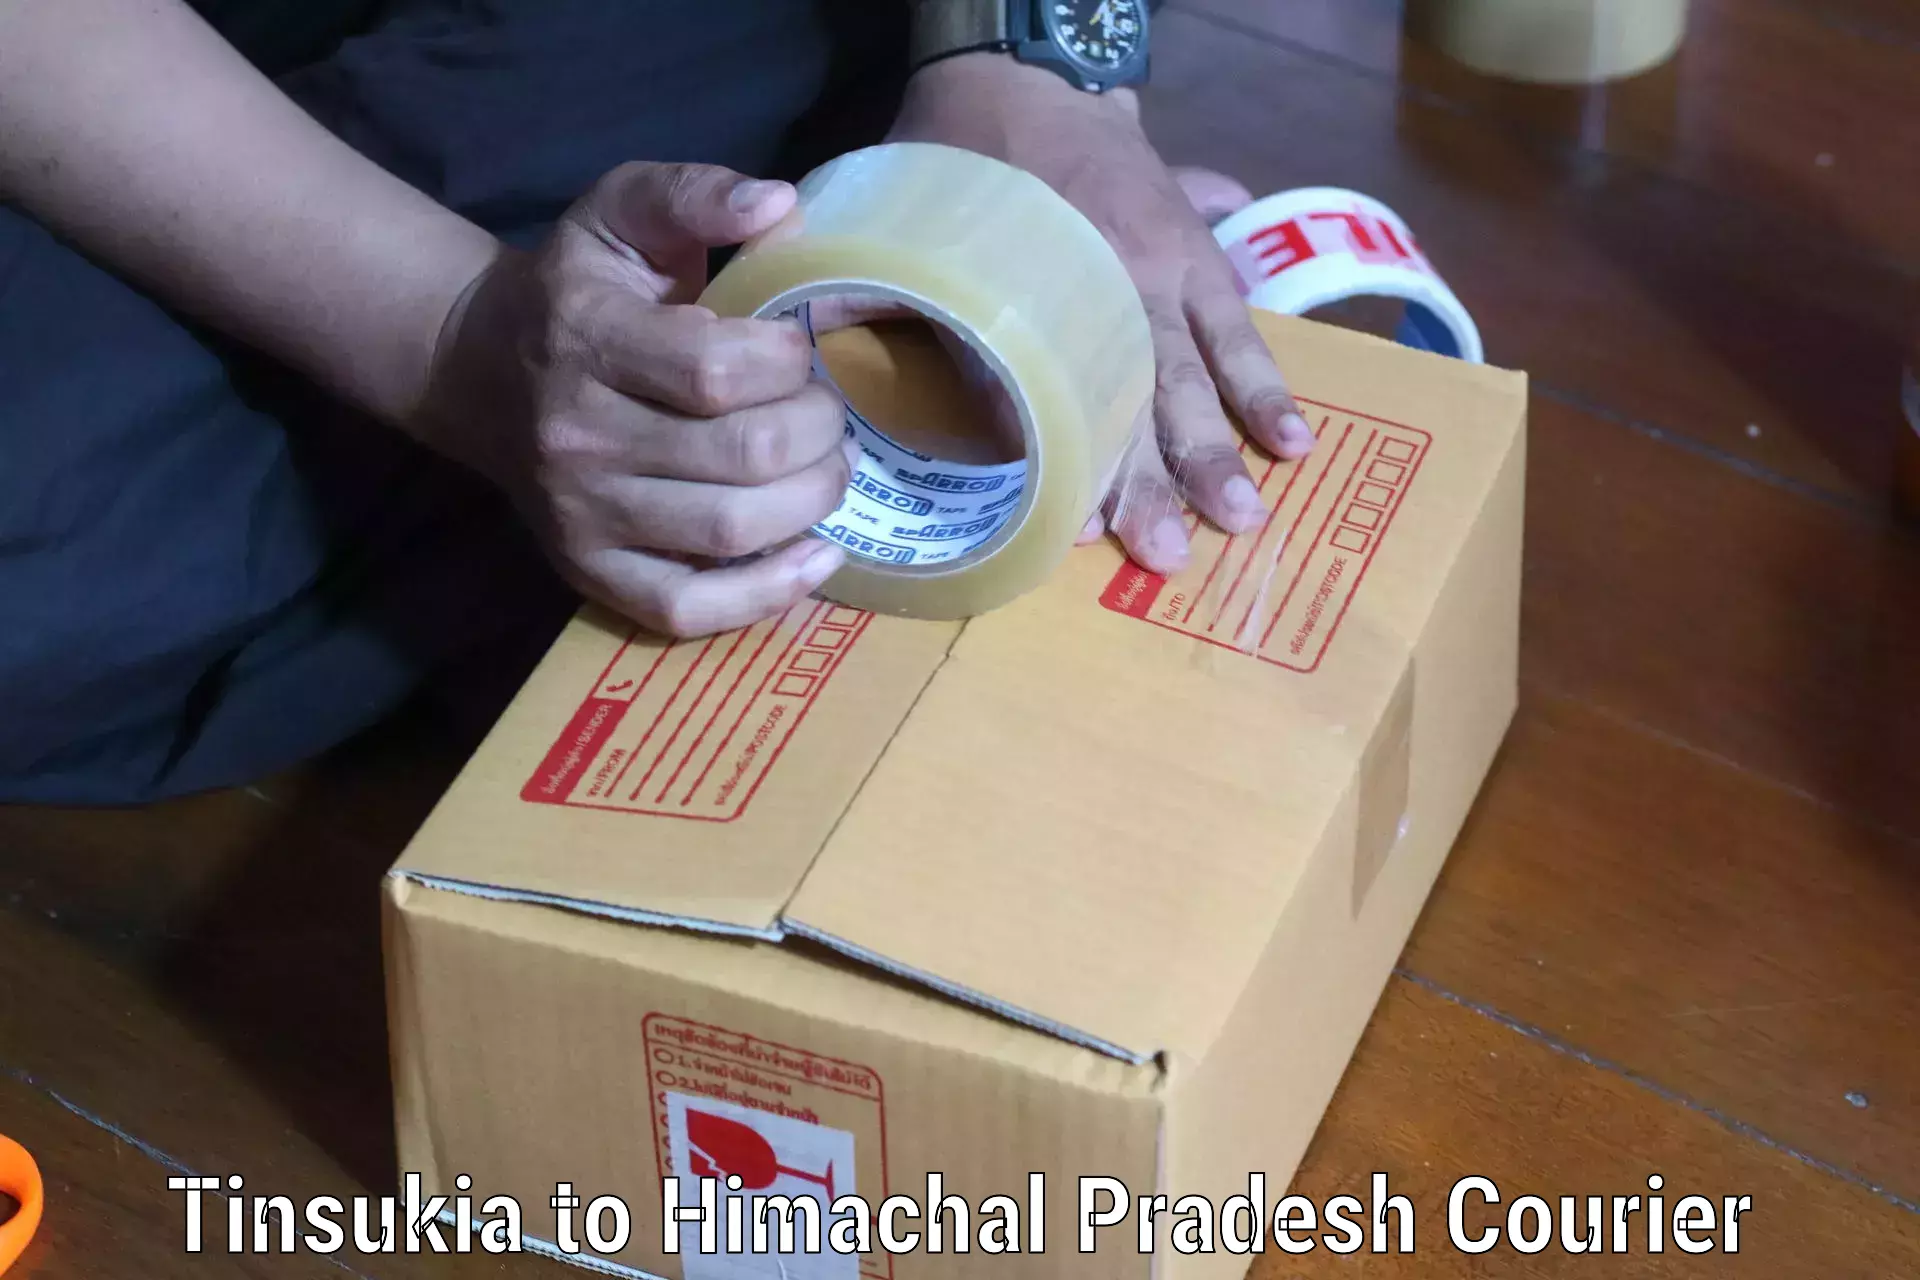 Courier service innovation Tinsukia to Dulchehra